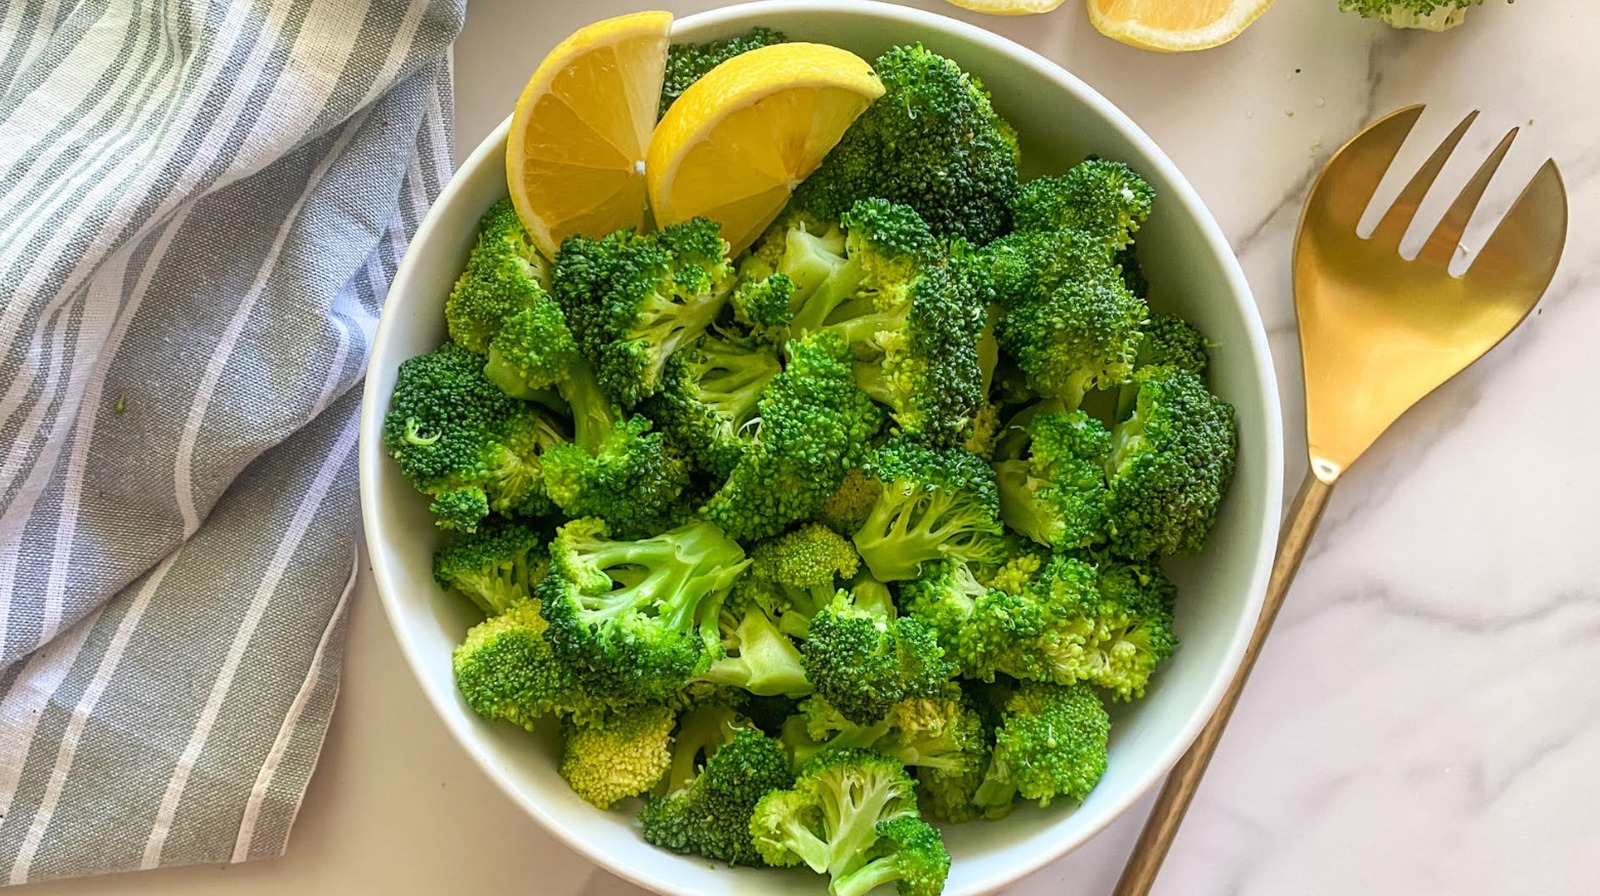 Top 4 Steamed Broccoli Recipes